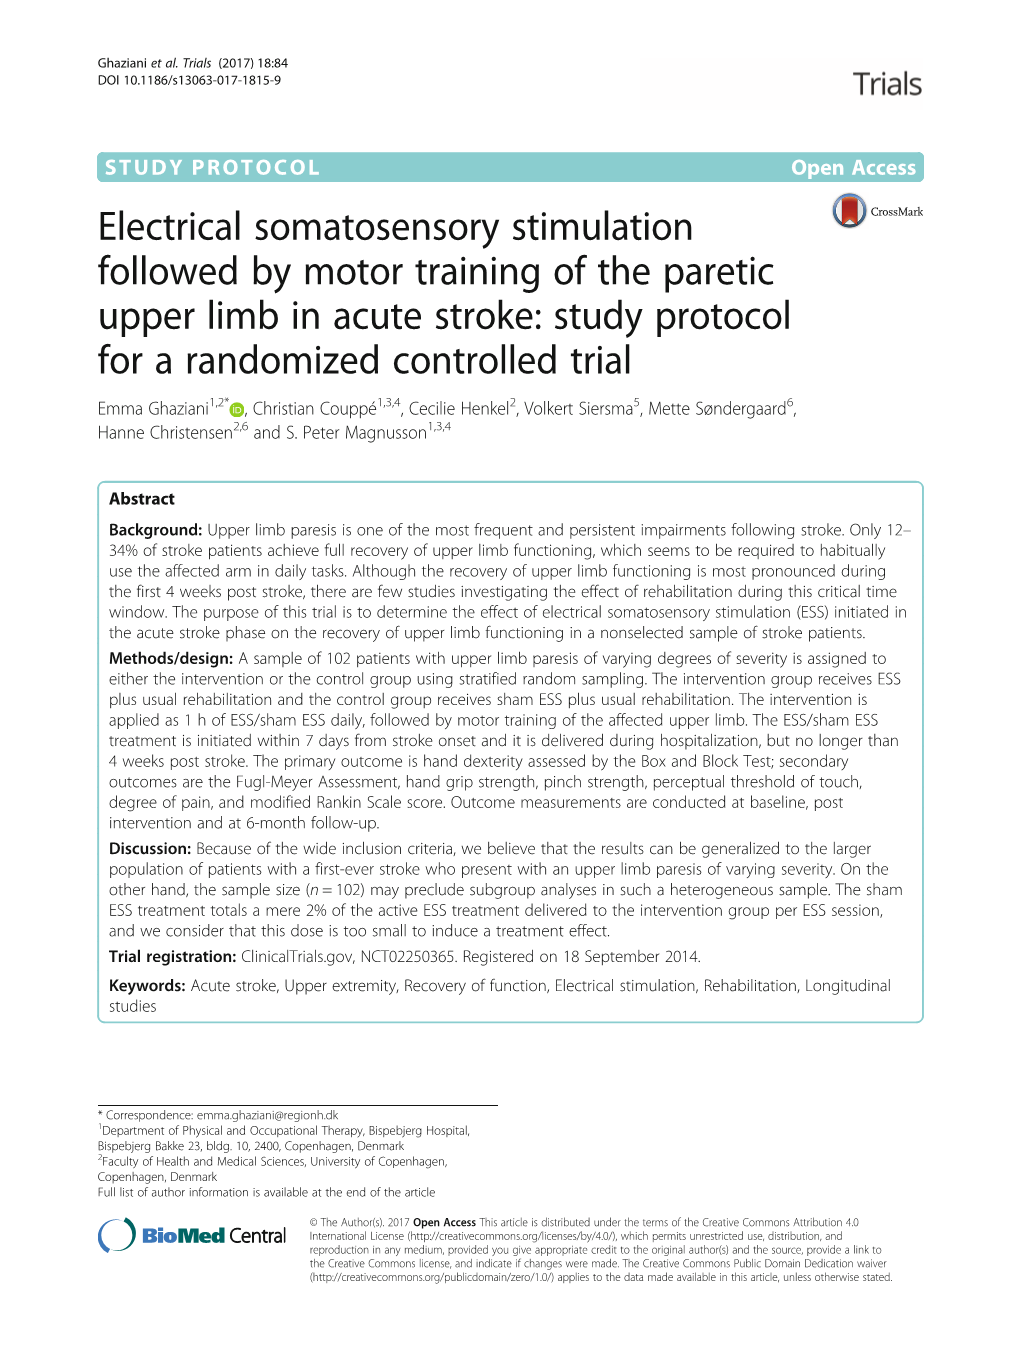 Electrical Somatosensory Stimulation Followed by Motor